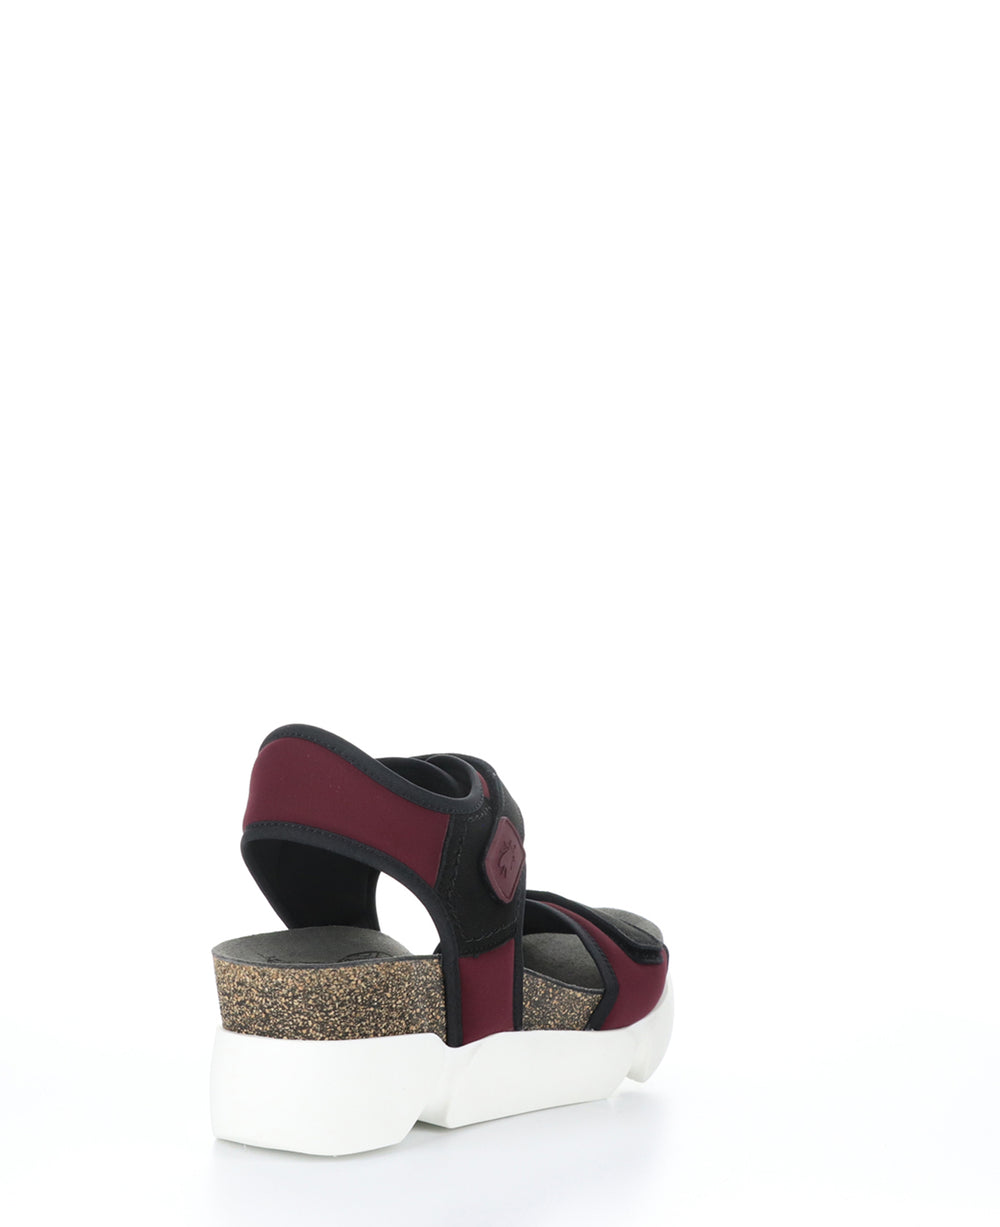 SIGO727FLY BORDEAUX/BLACK Wedge Sandals